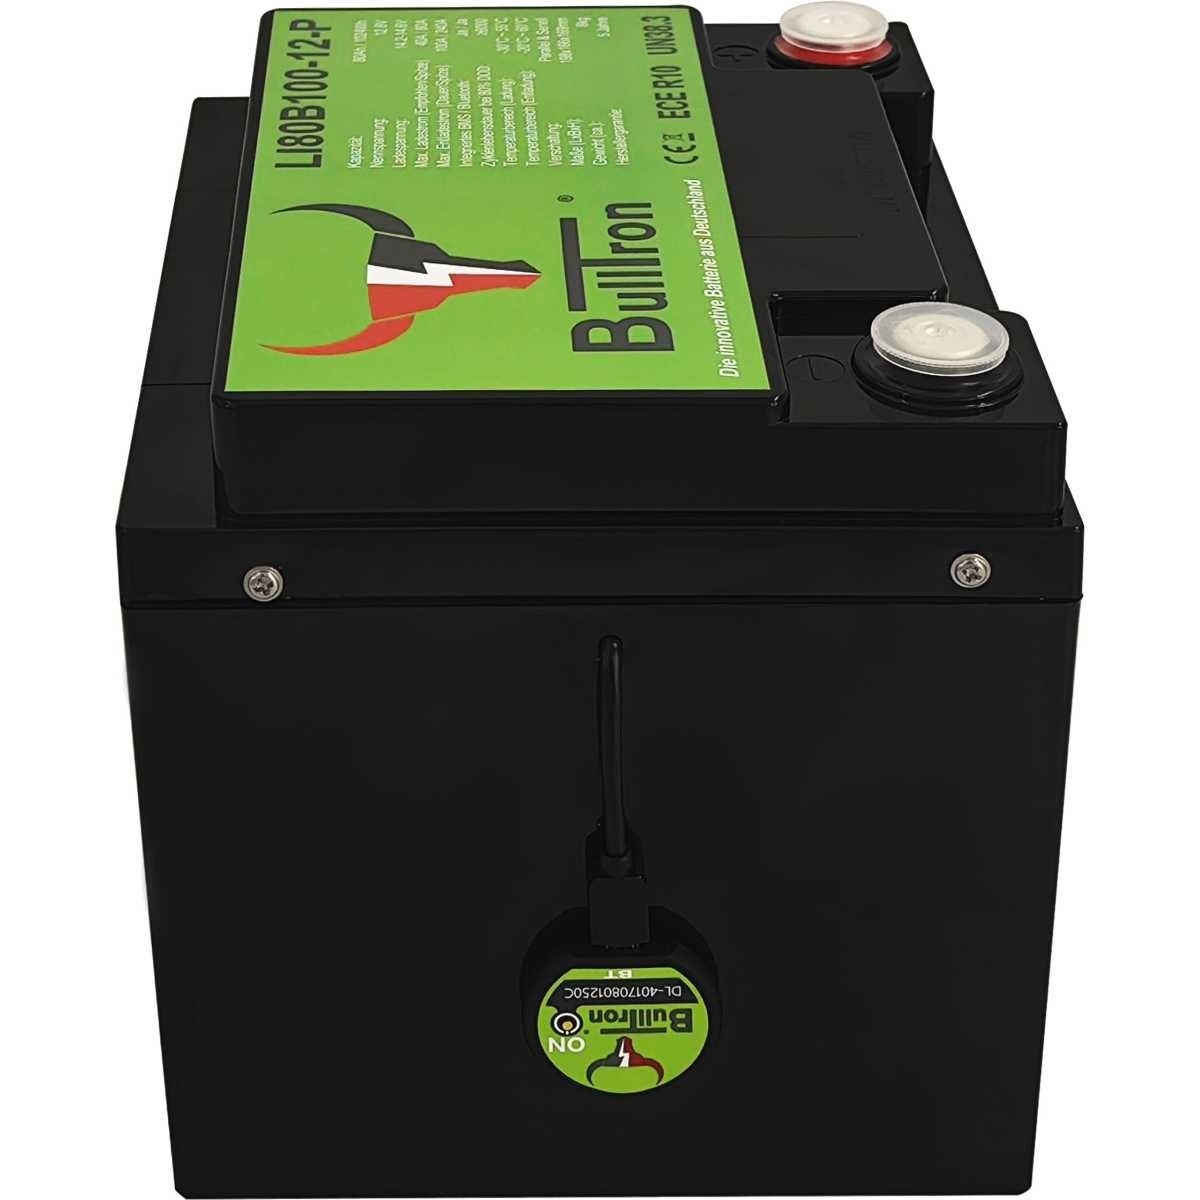 BULLTRON Lithium-Batterie POLAR 80Ah 12V inkl. BMS 100A Dauerstrom - App - LI80B100-12-P